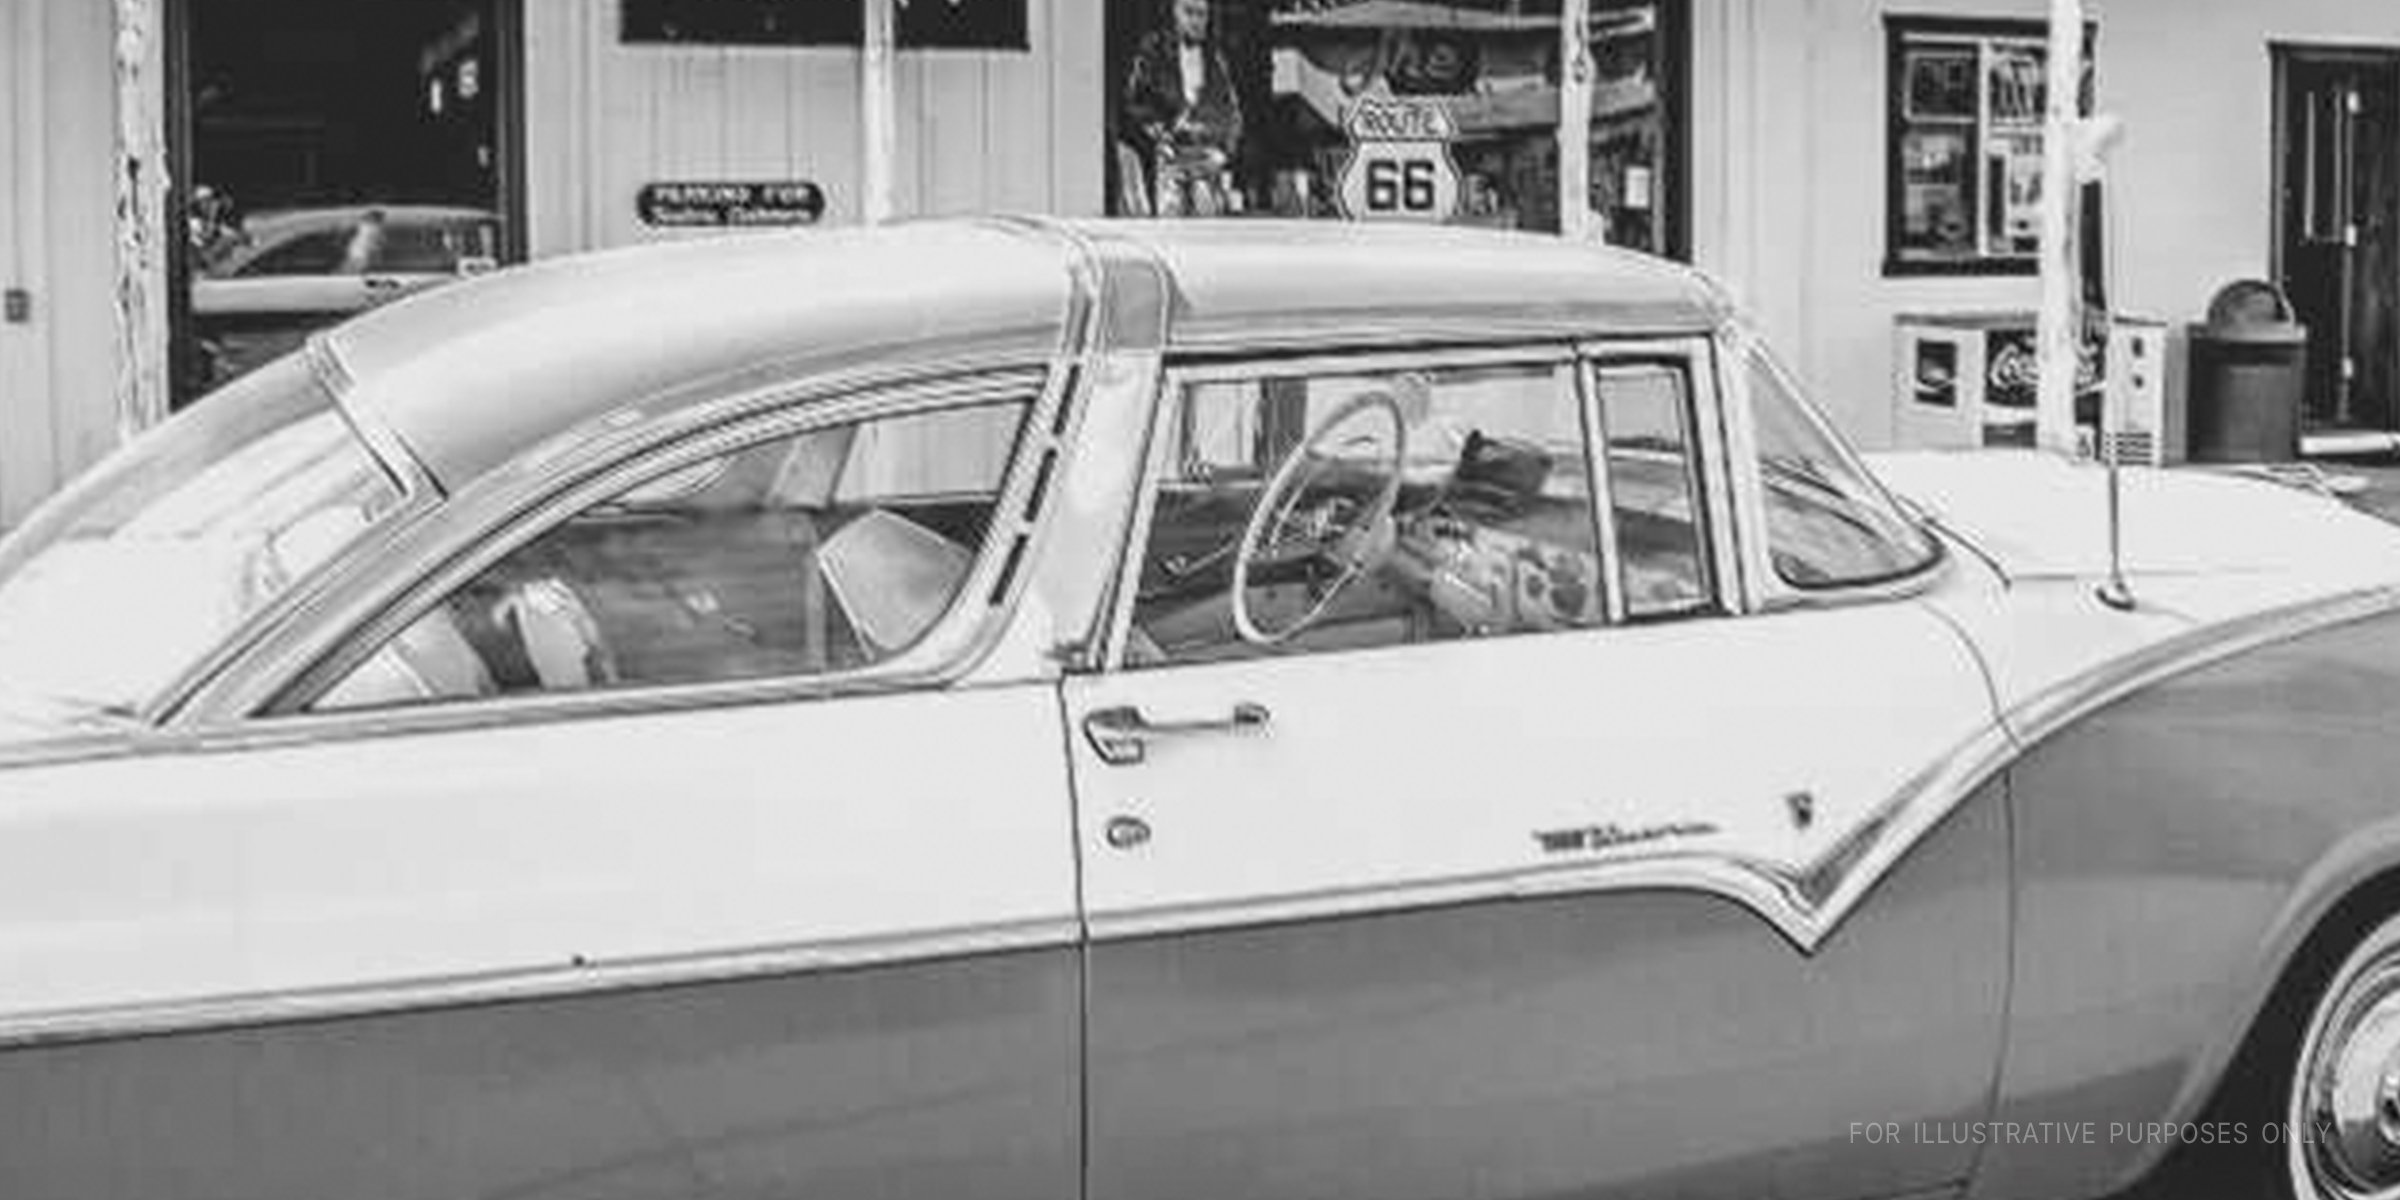 A vintage car | Source: Shutterstock